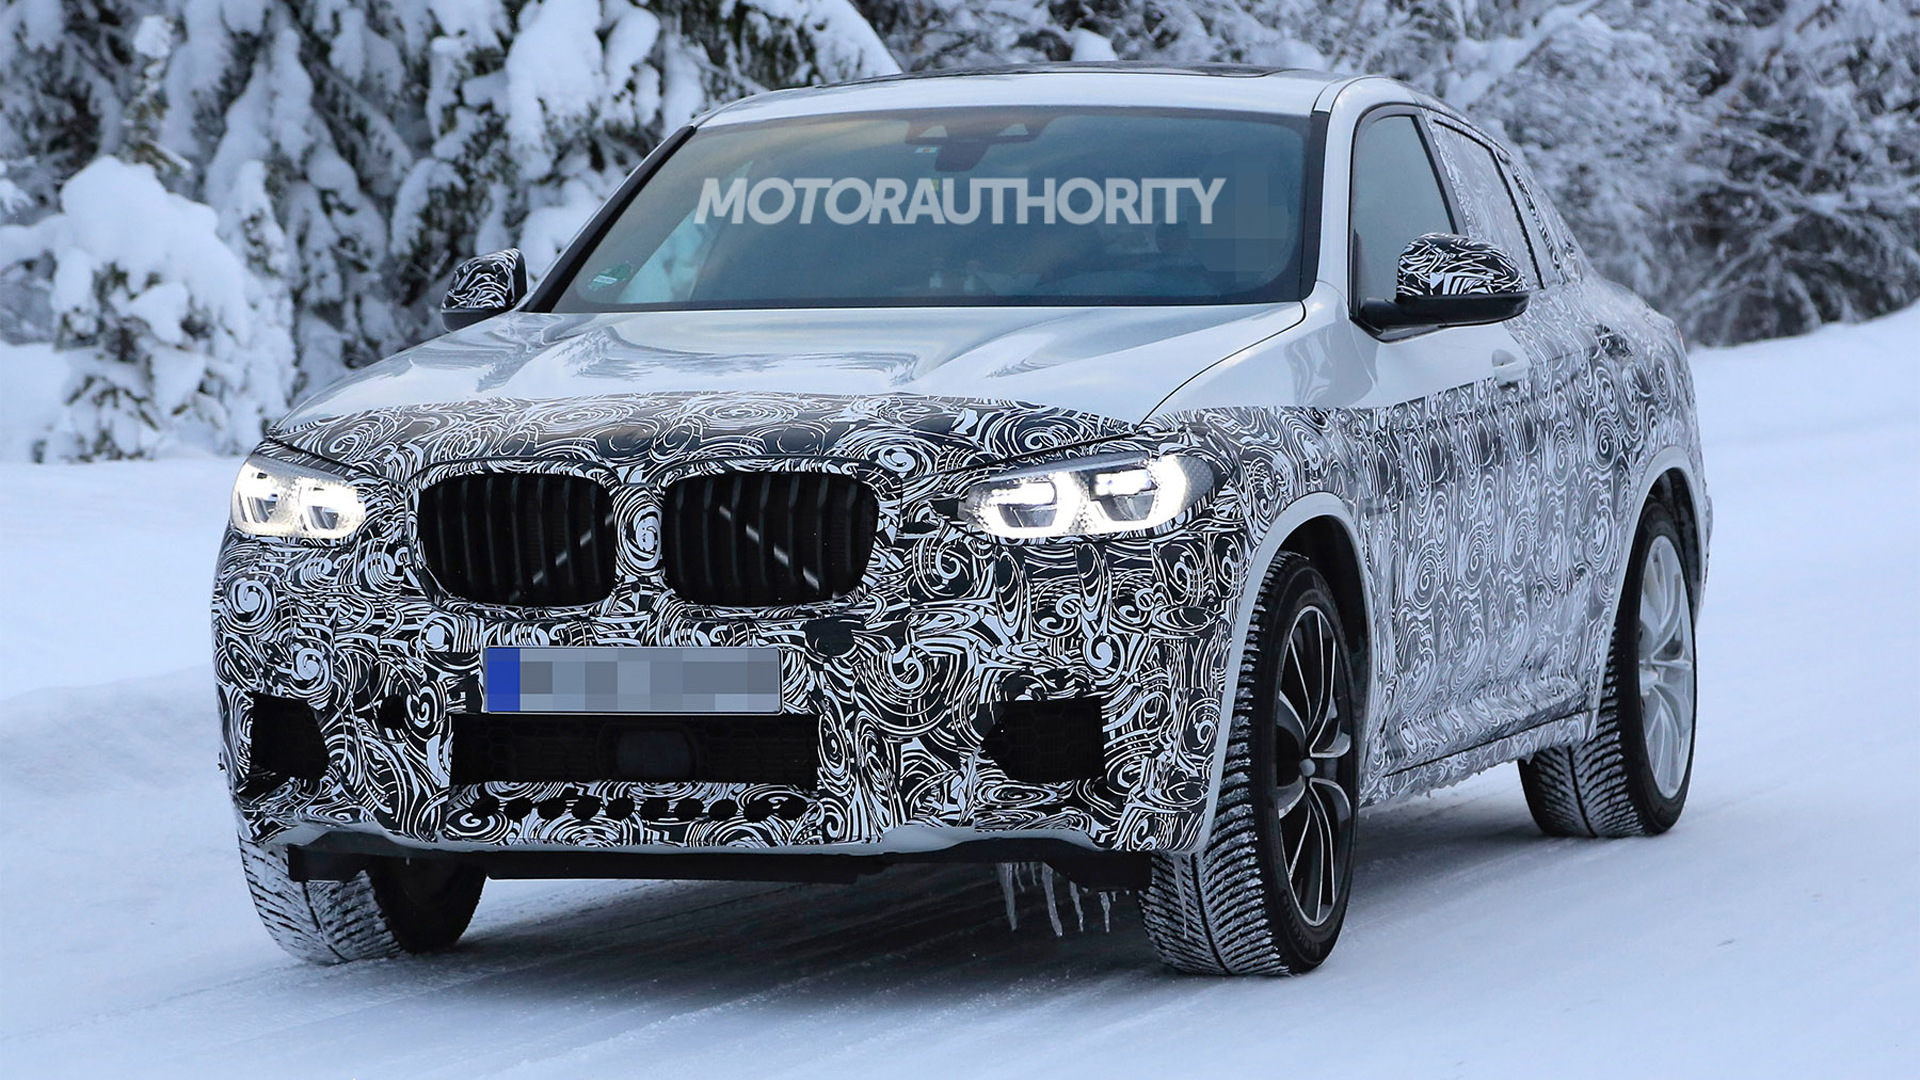 2019 BMW X4 M spy shots - Image via S. Baldauf/SB-Medien